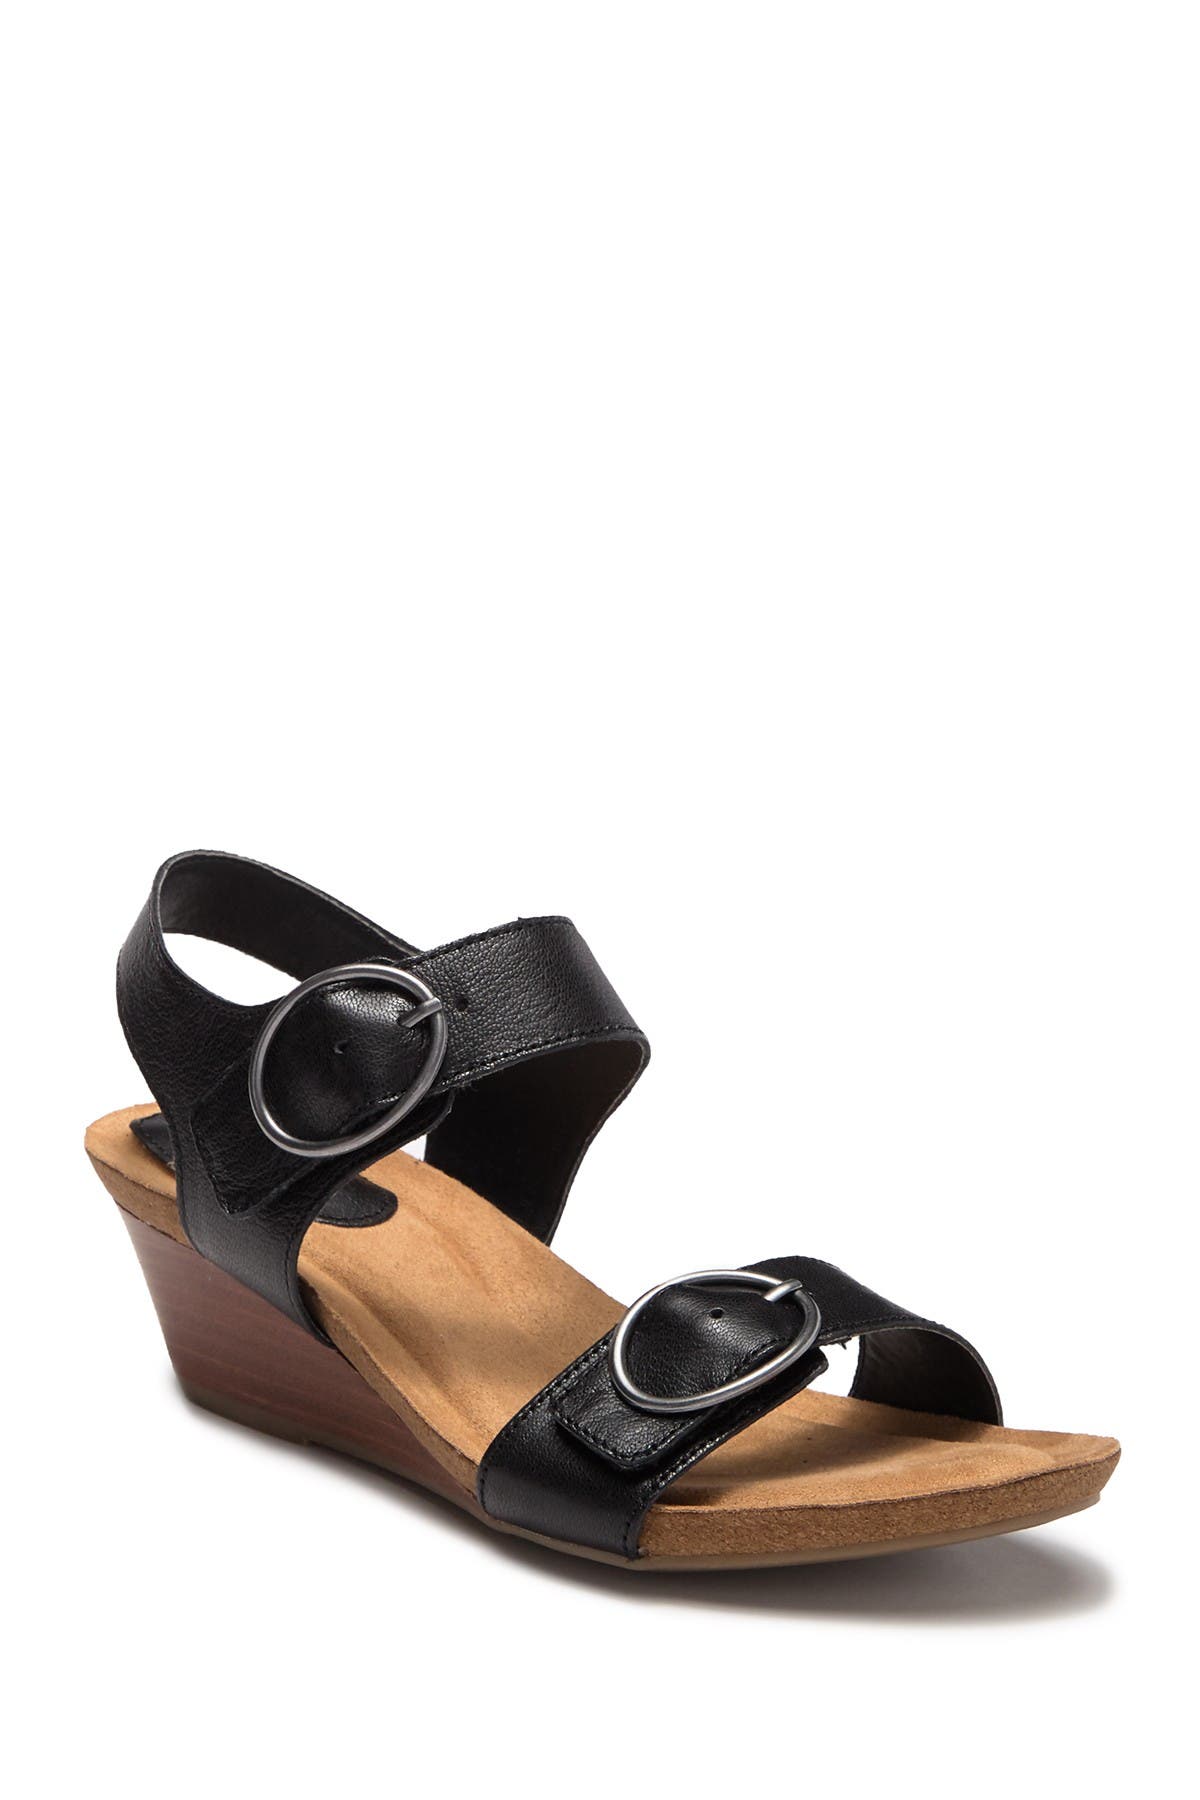 Sofft | Valina Leather Wedge Sandal 